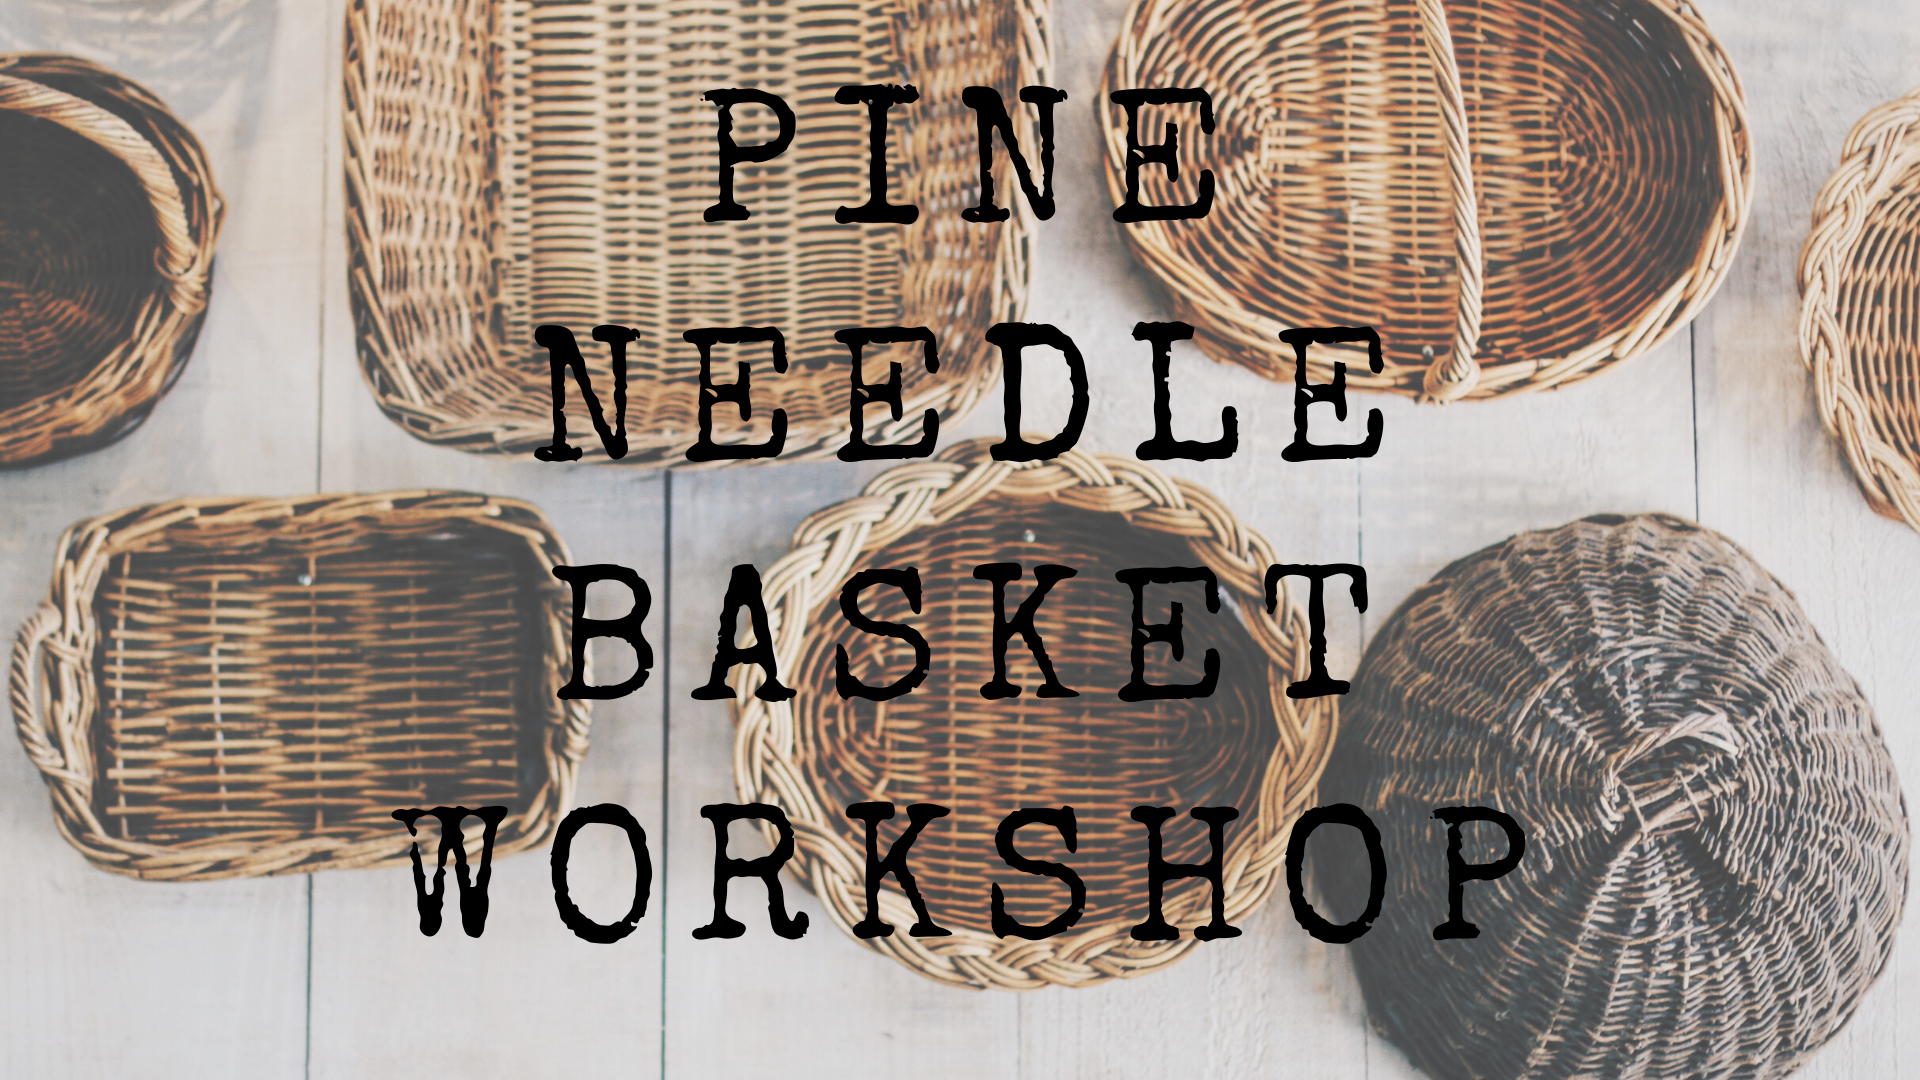 Pine Needle Basket Workshop